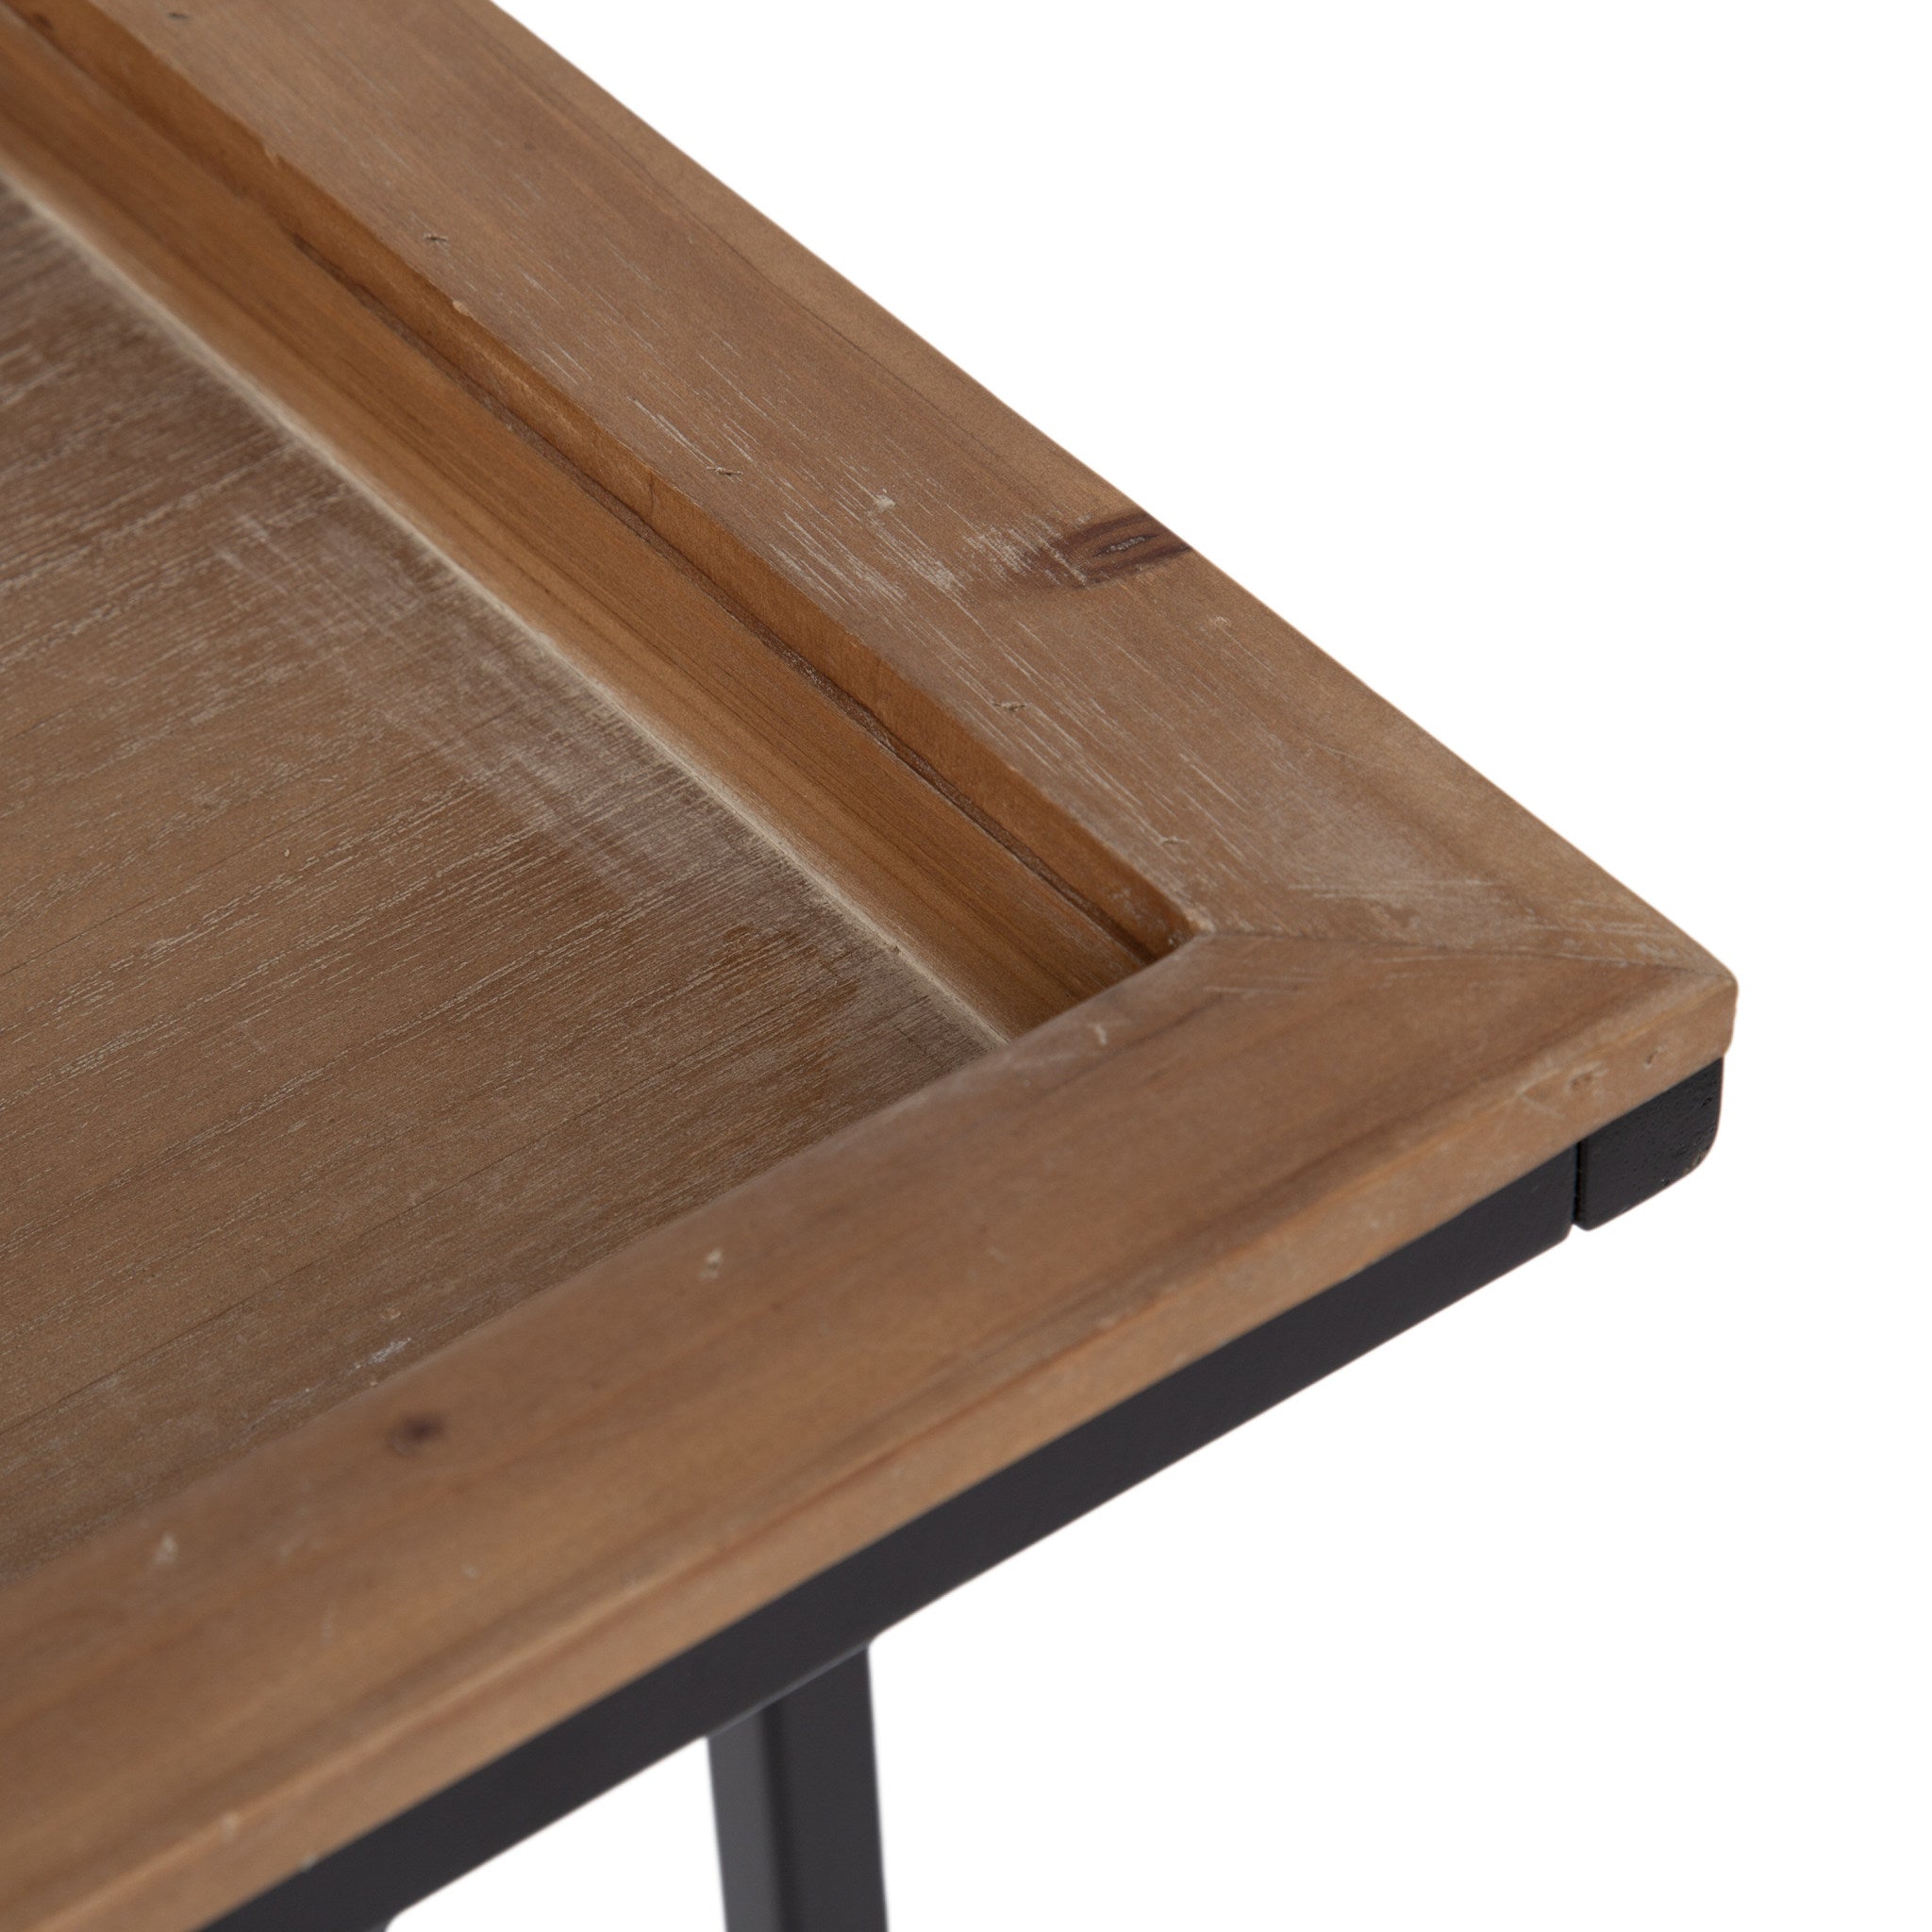 Lockridge Wood and Metal Console Table